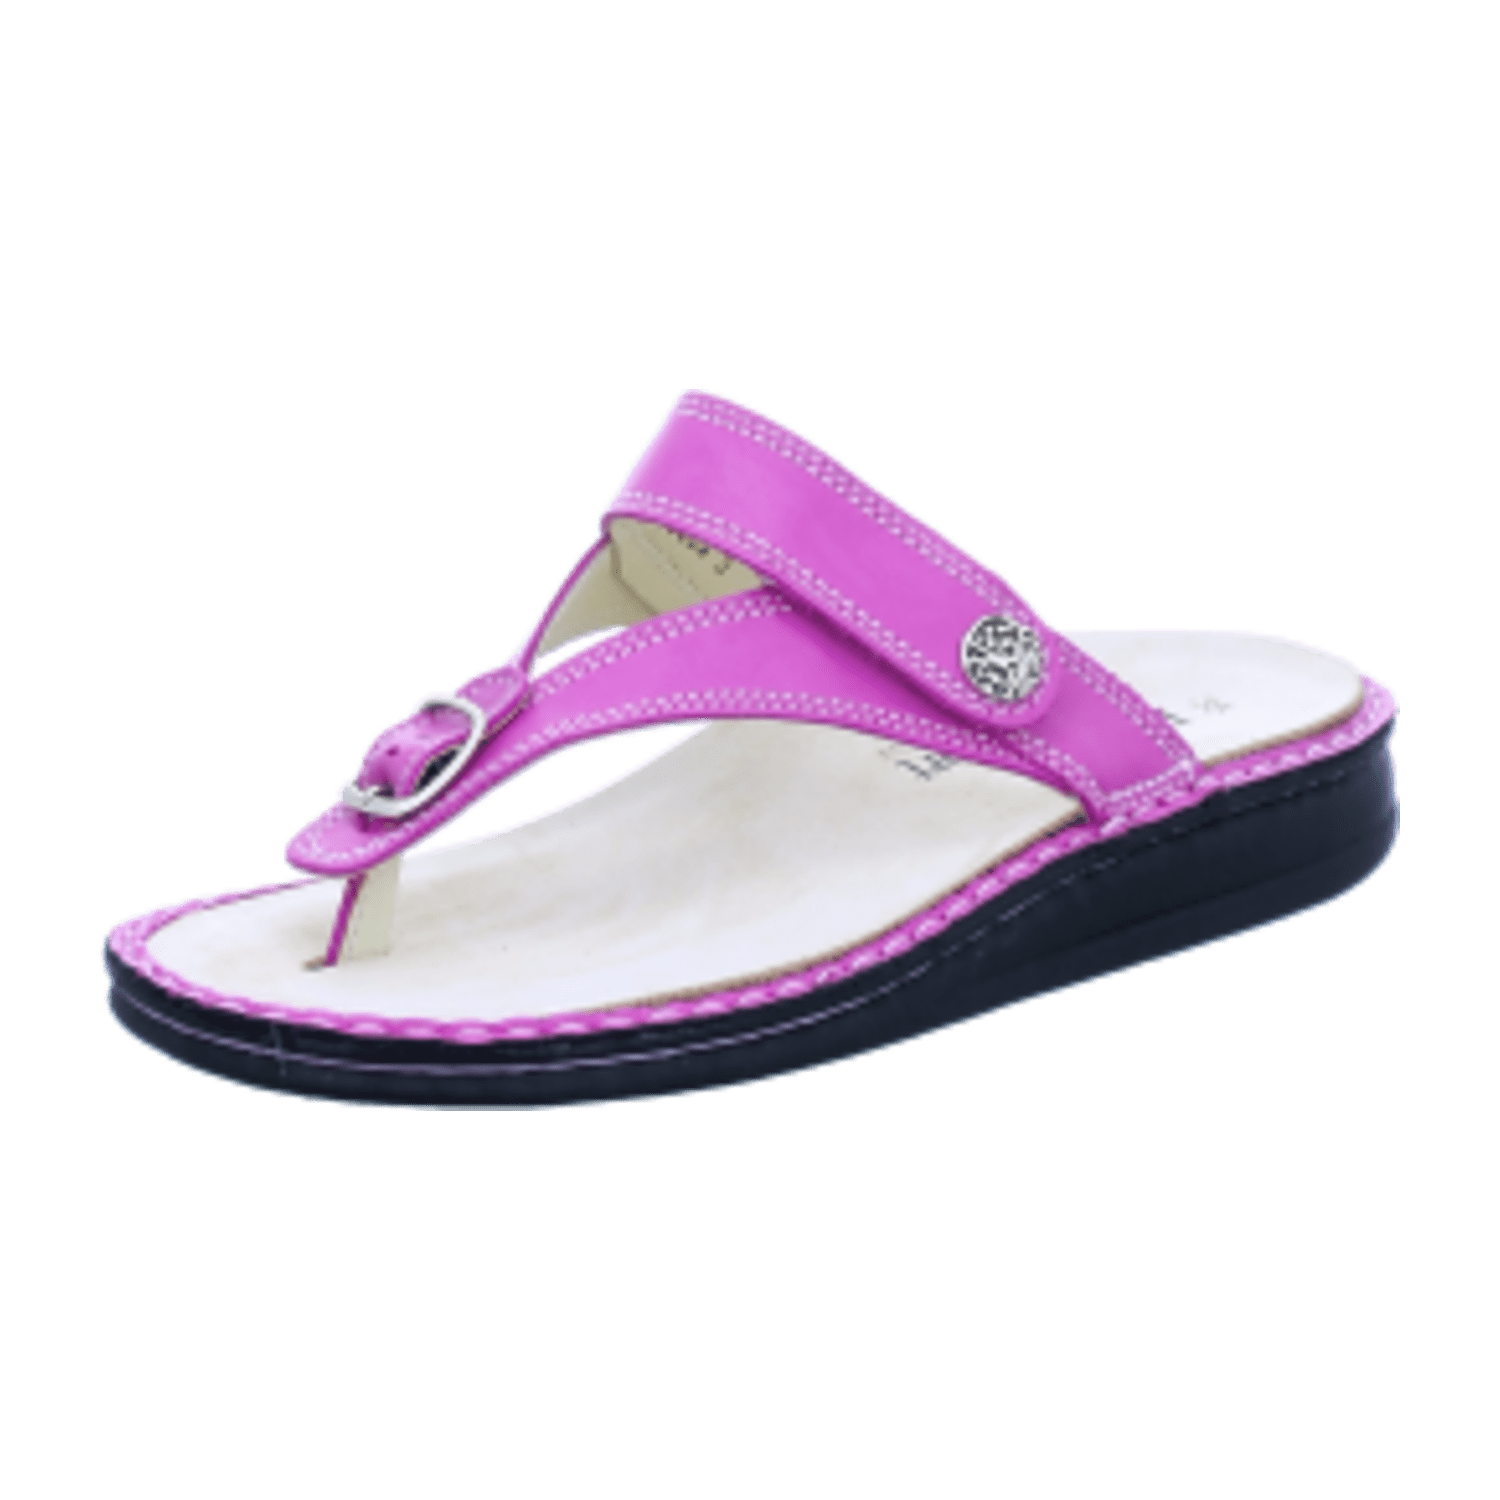 FinnComfort Alexandria-Soft Pink - Zehentrenner - Damenschuhe Pantolette /  Zehentrenner, Mehrfarbig, leder (nube)